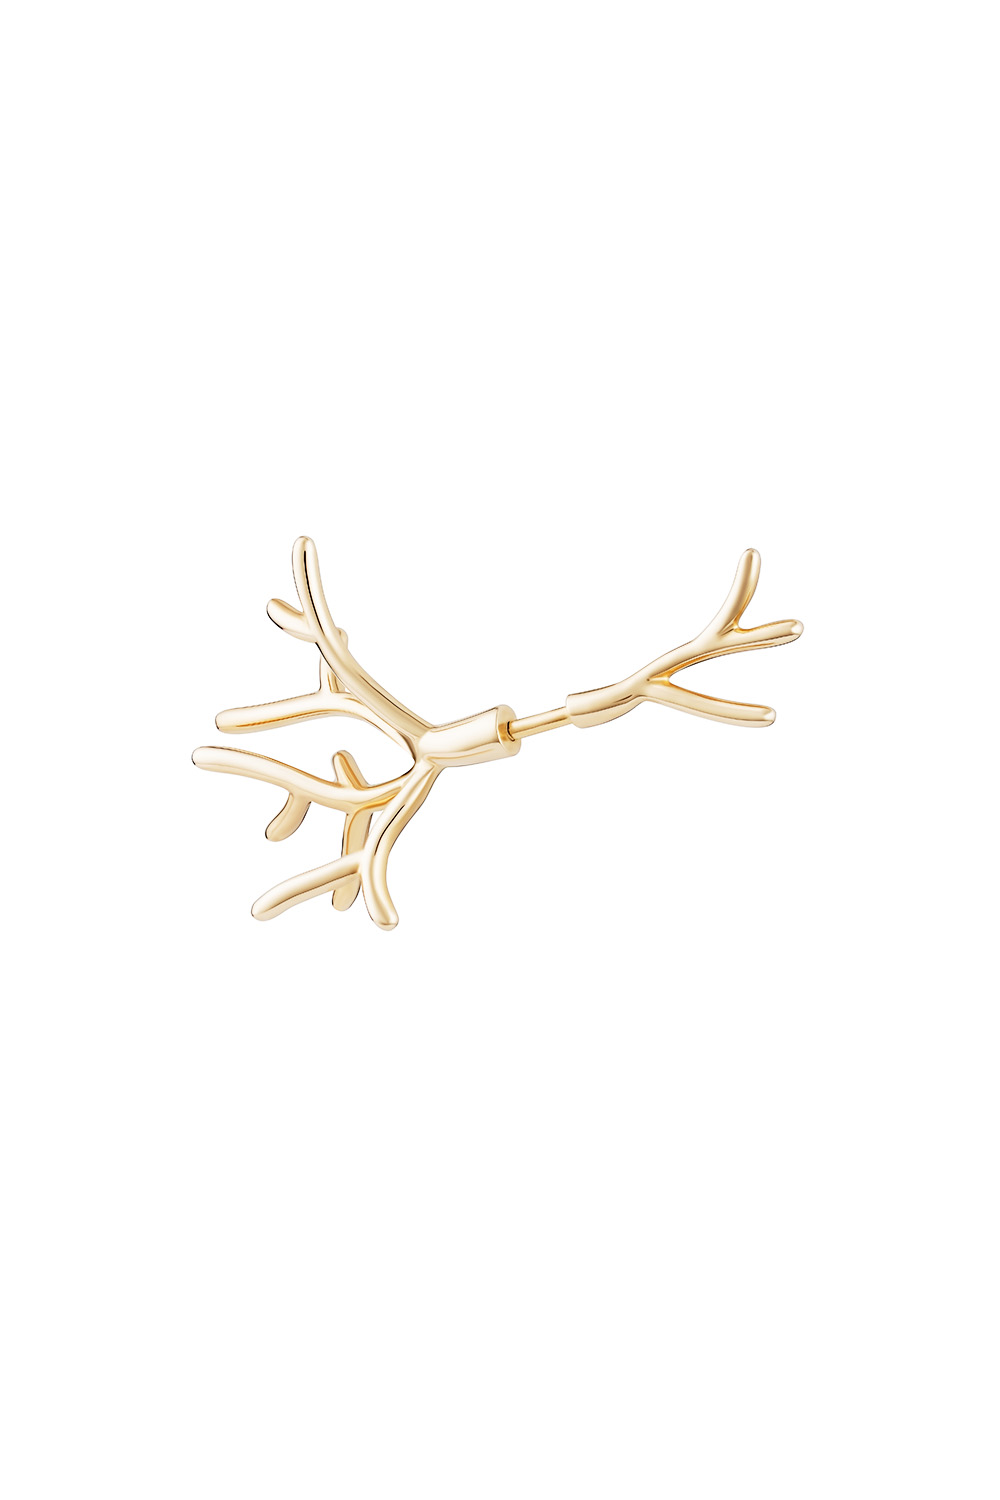 Koral Bush Small Gold Single Earring